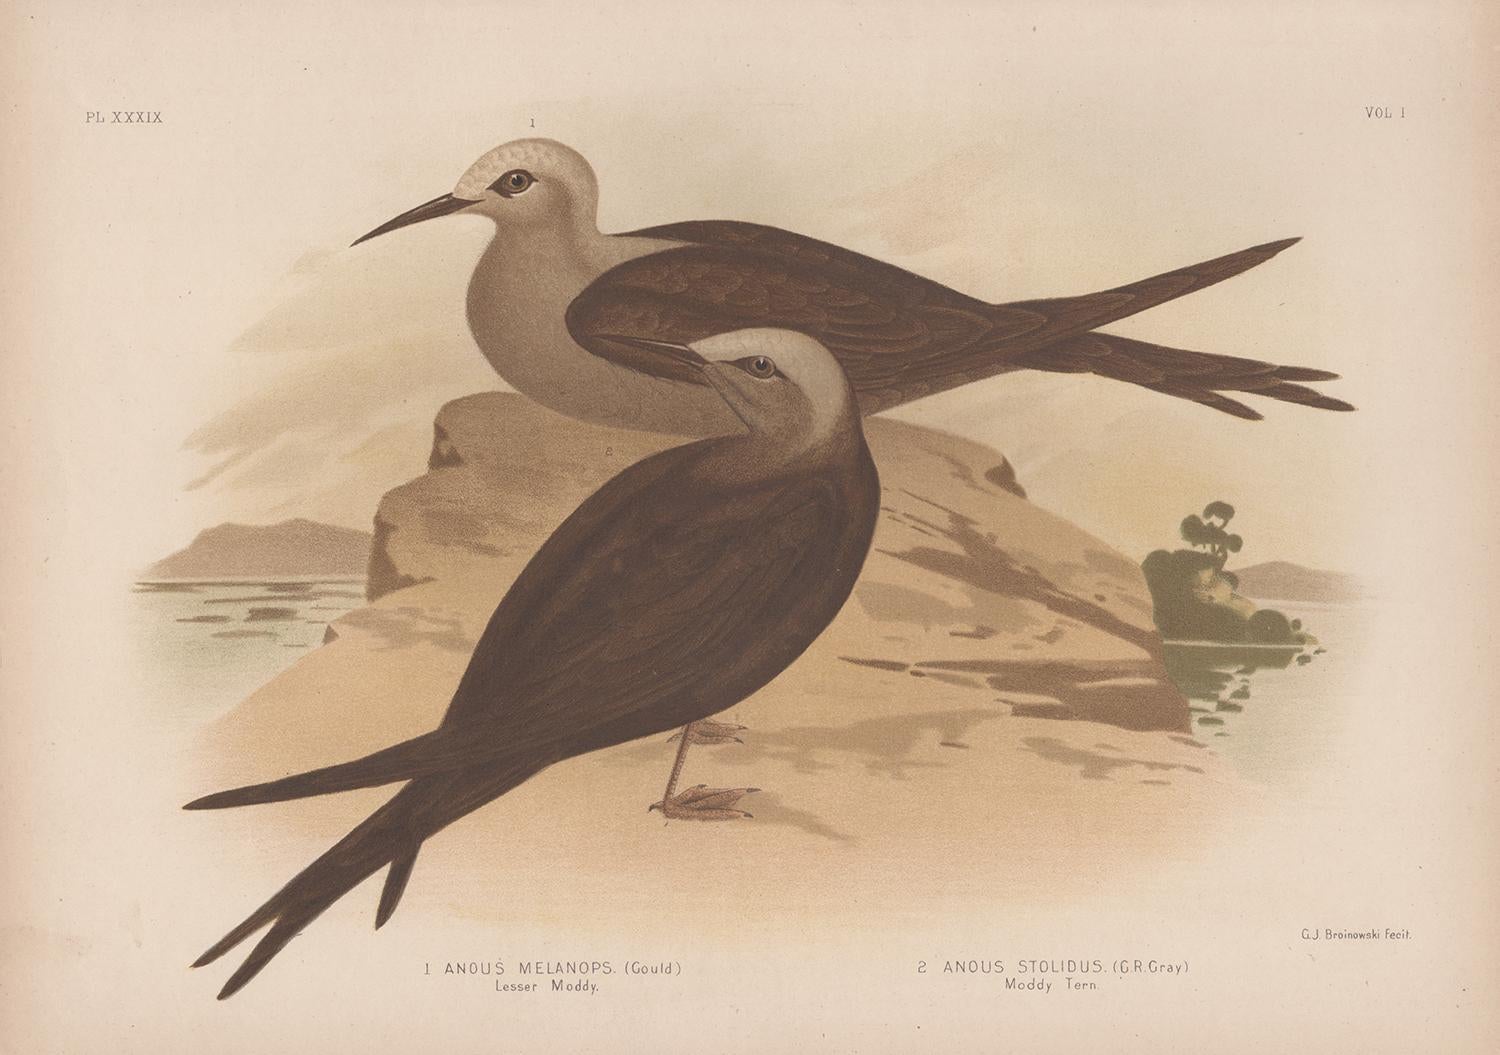 Gracius Broinowski Animal Print - Lesser Moddy and Moddy Tern, antique sea bird chromolithograph print, 1889